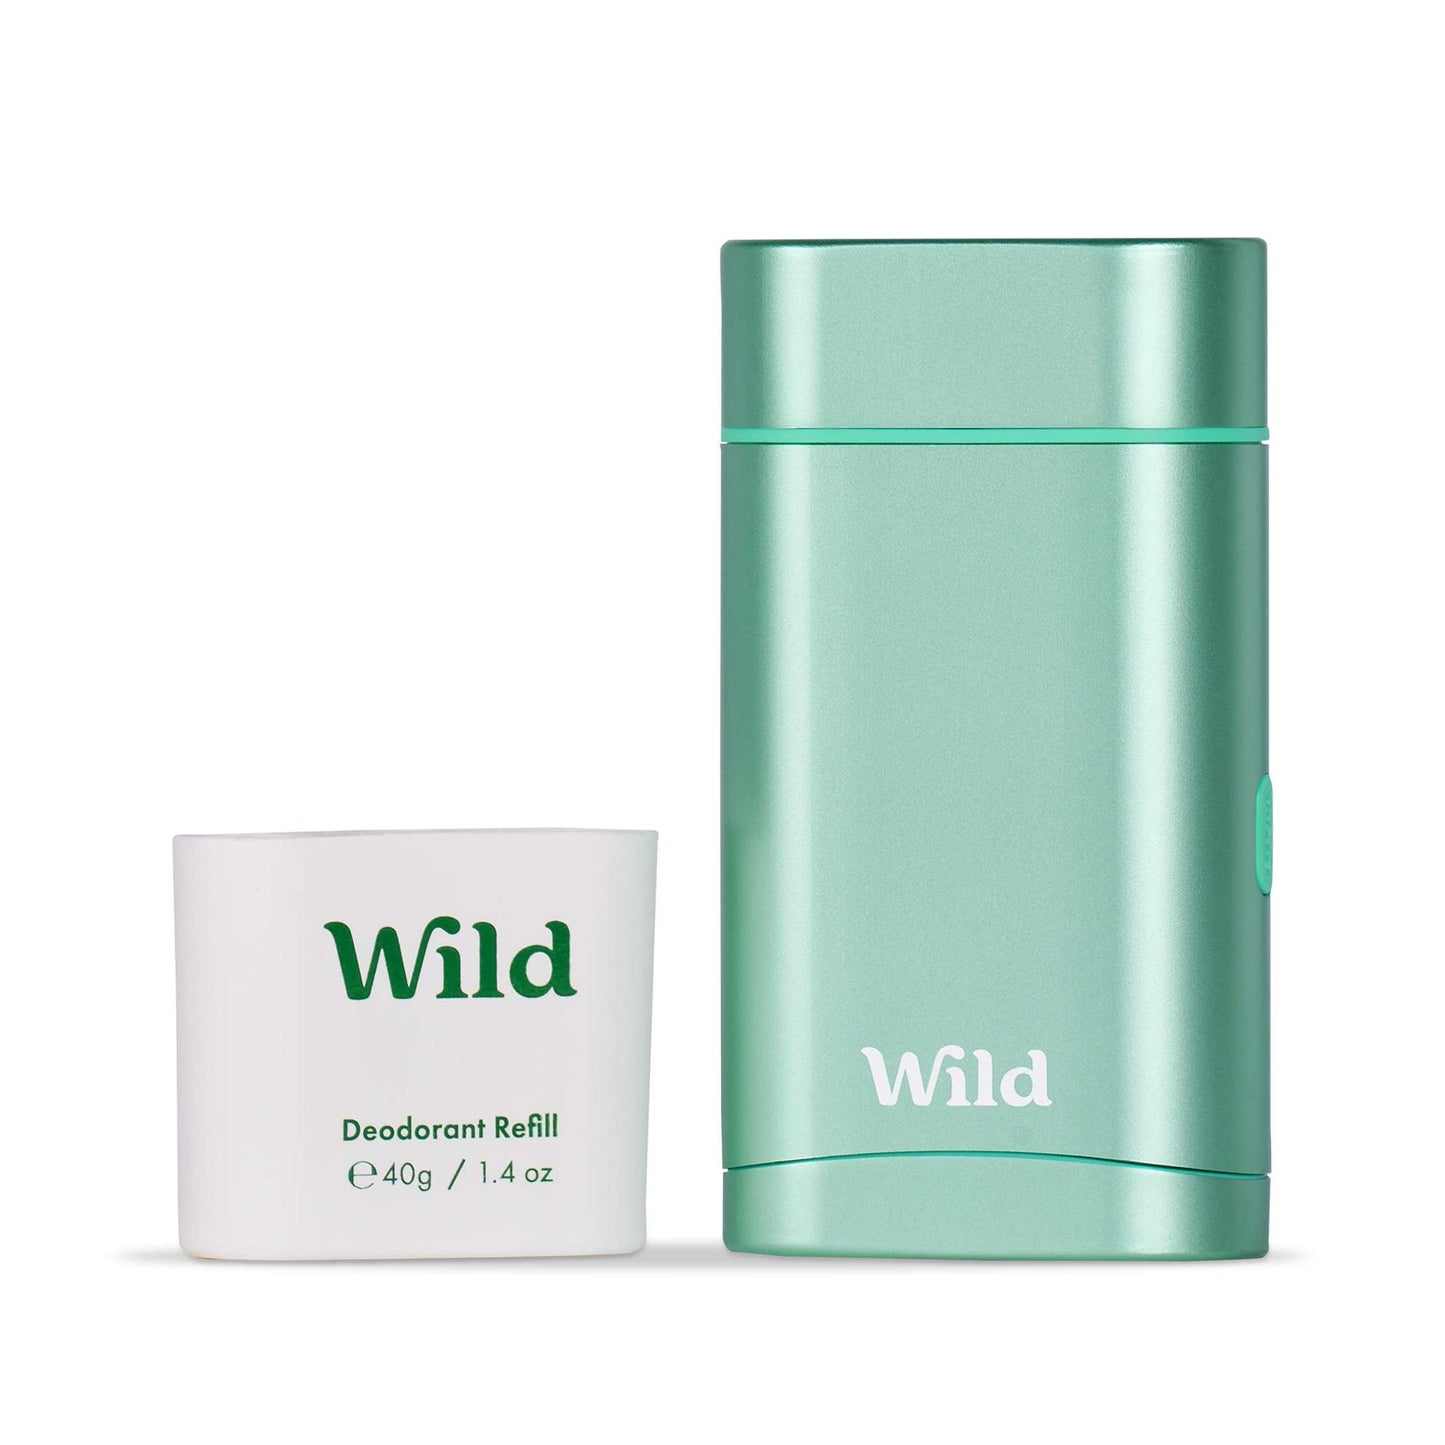 Wild Deodorant Wild Aqua Case and Mint & Aloe Vera Natural Deodorant Starter Pack